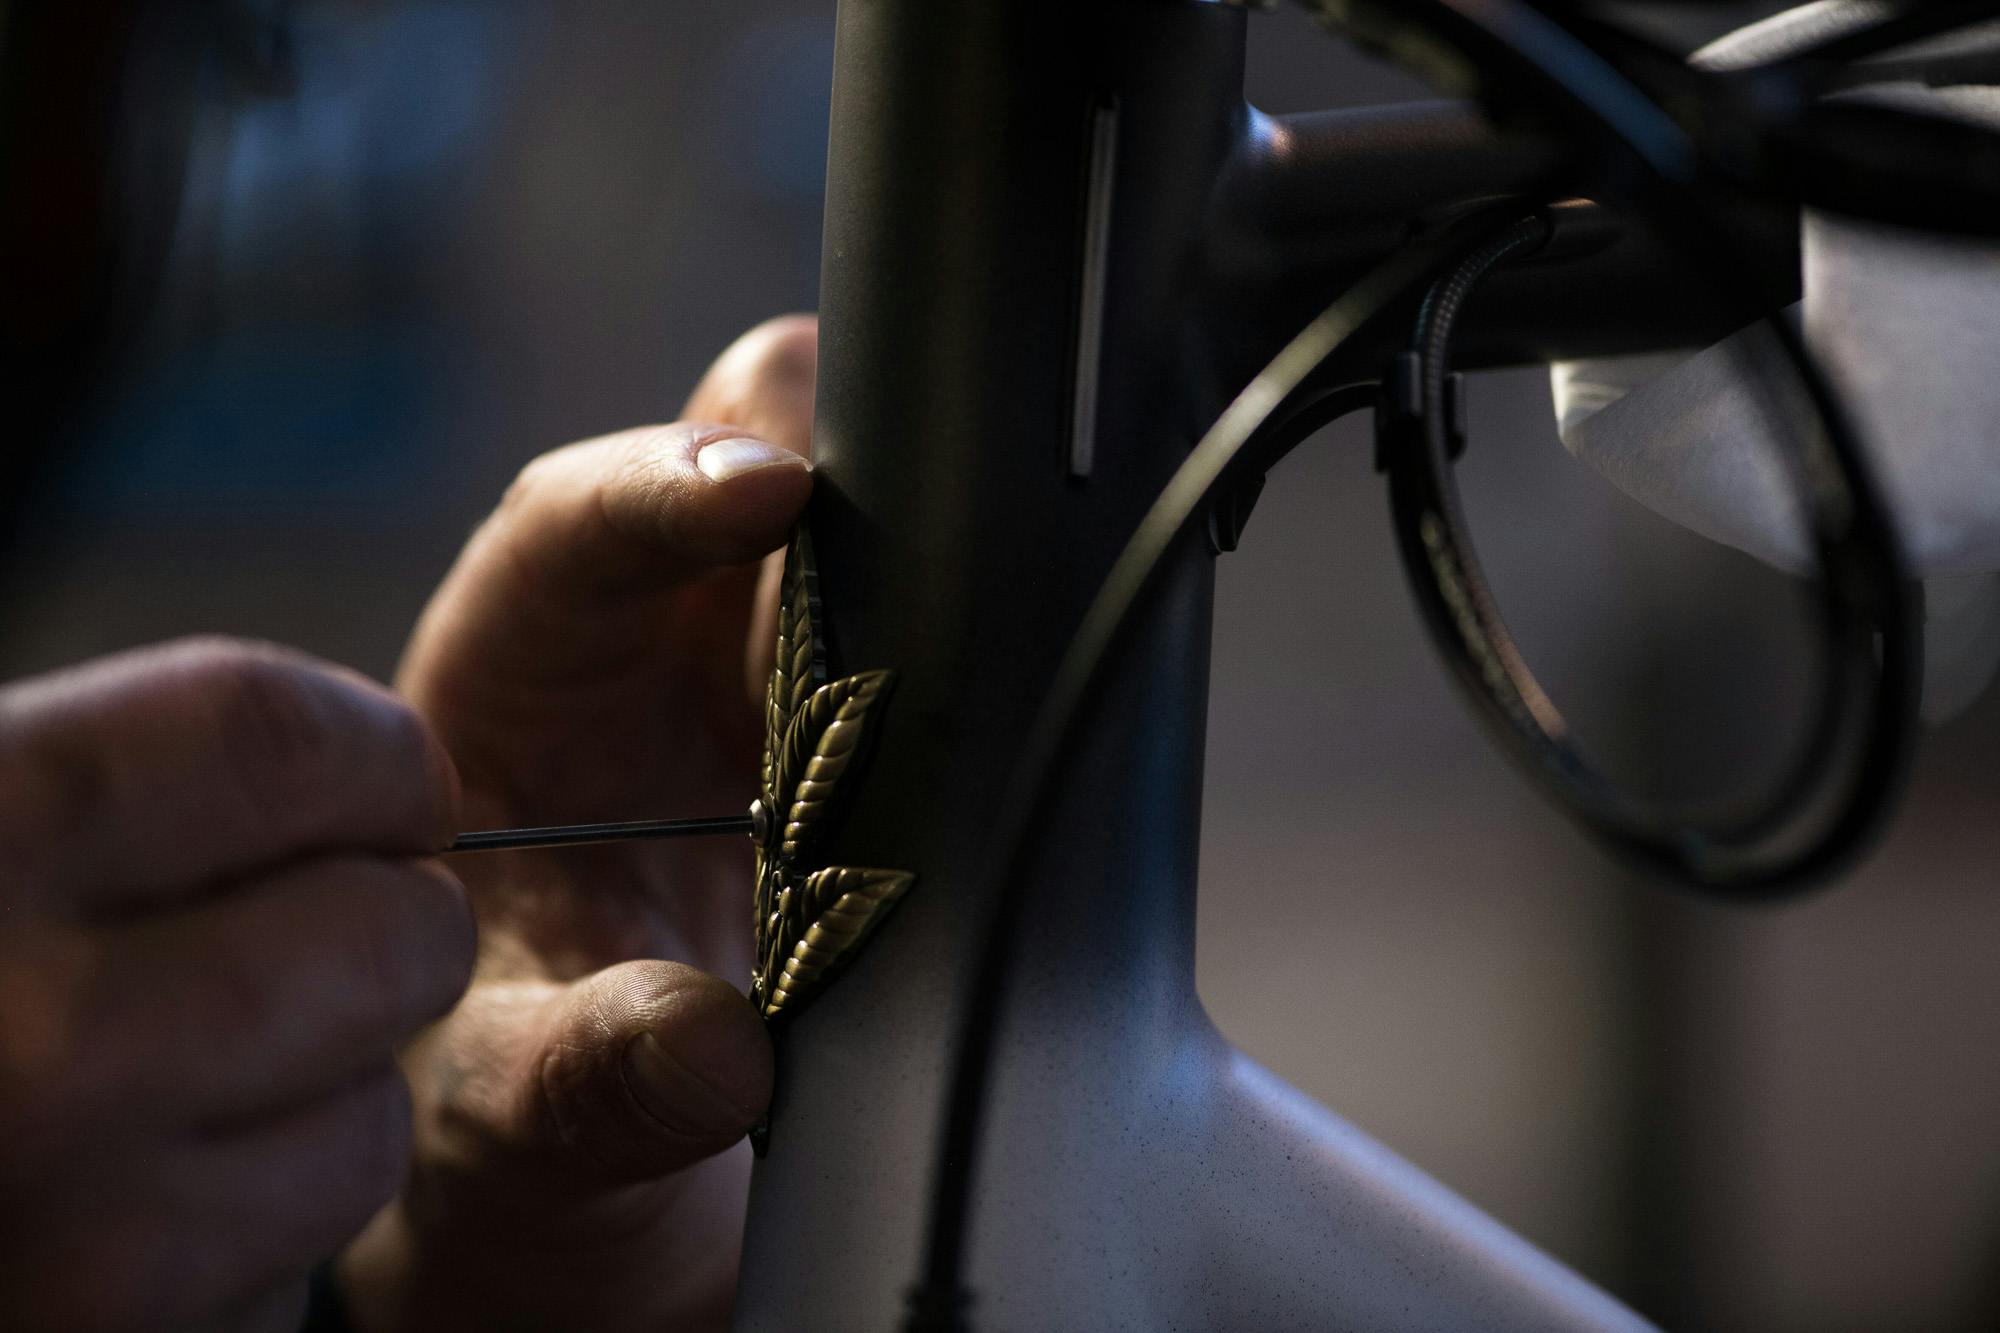 A craftsman adds a head badge to a bike.